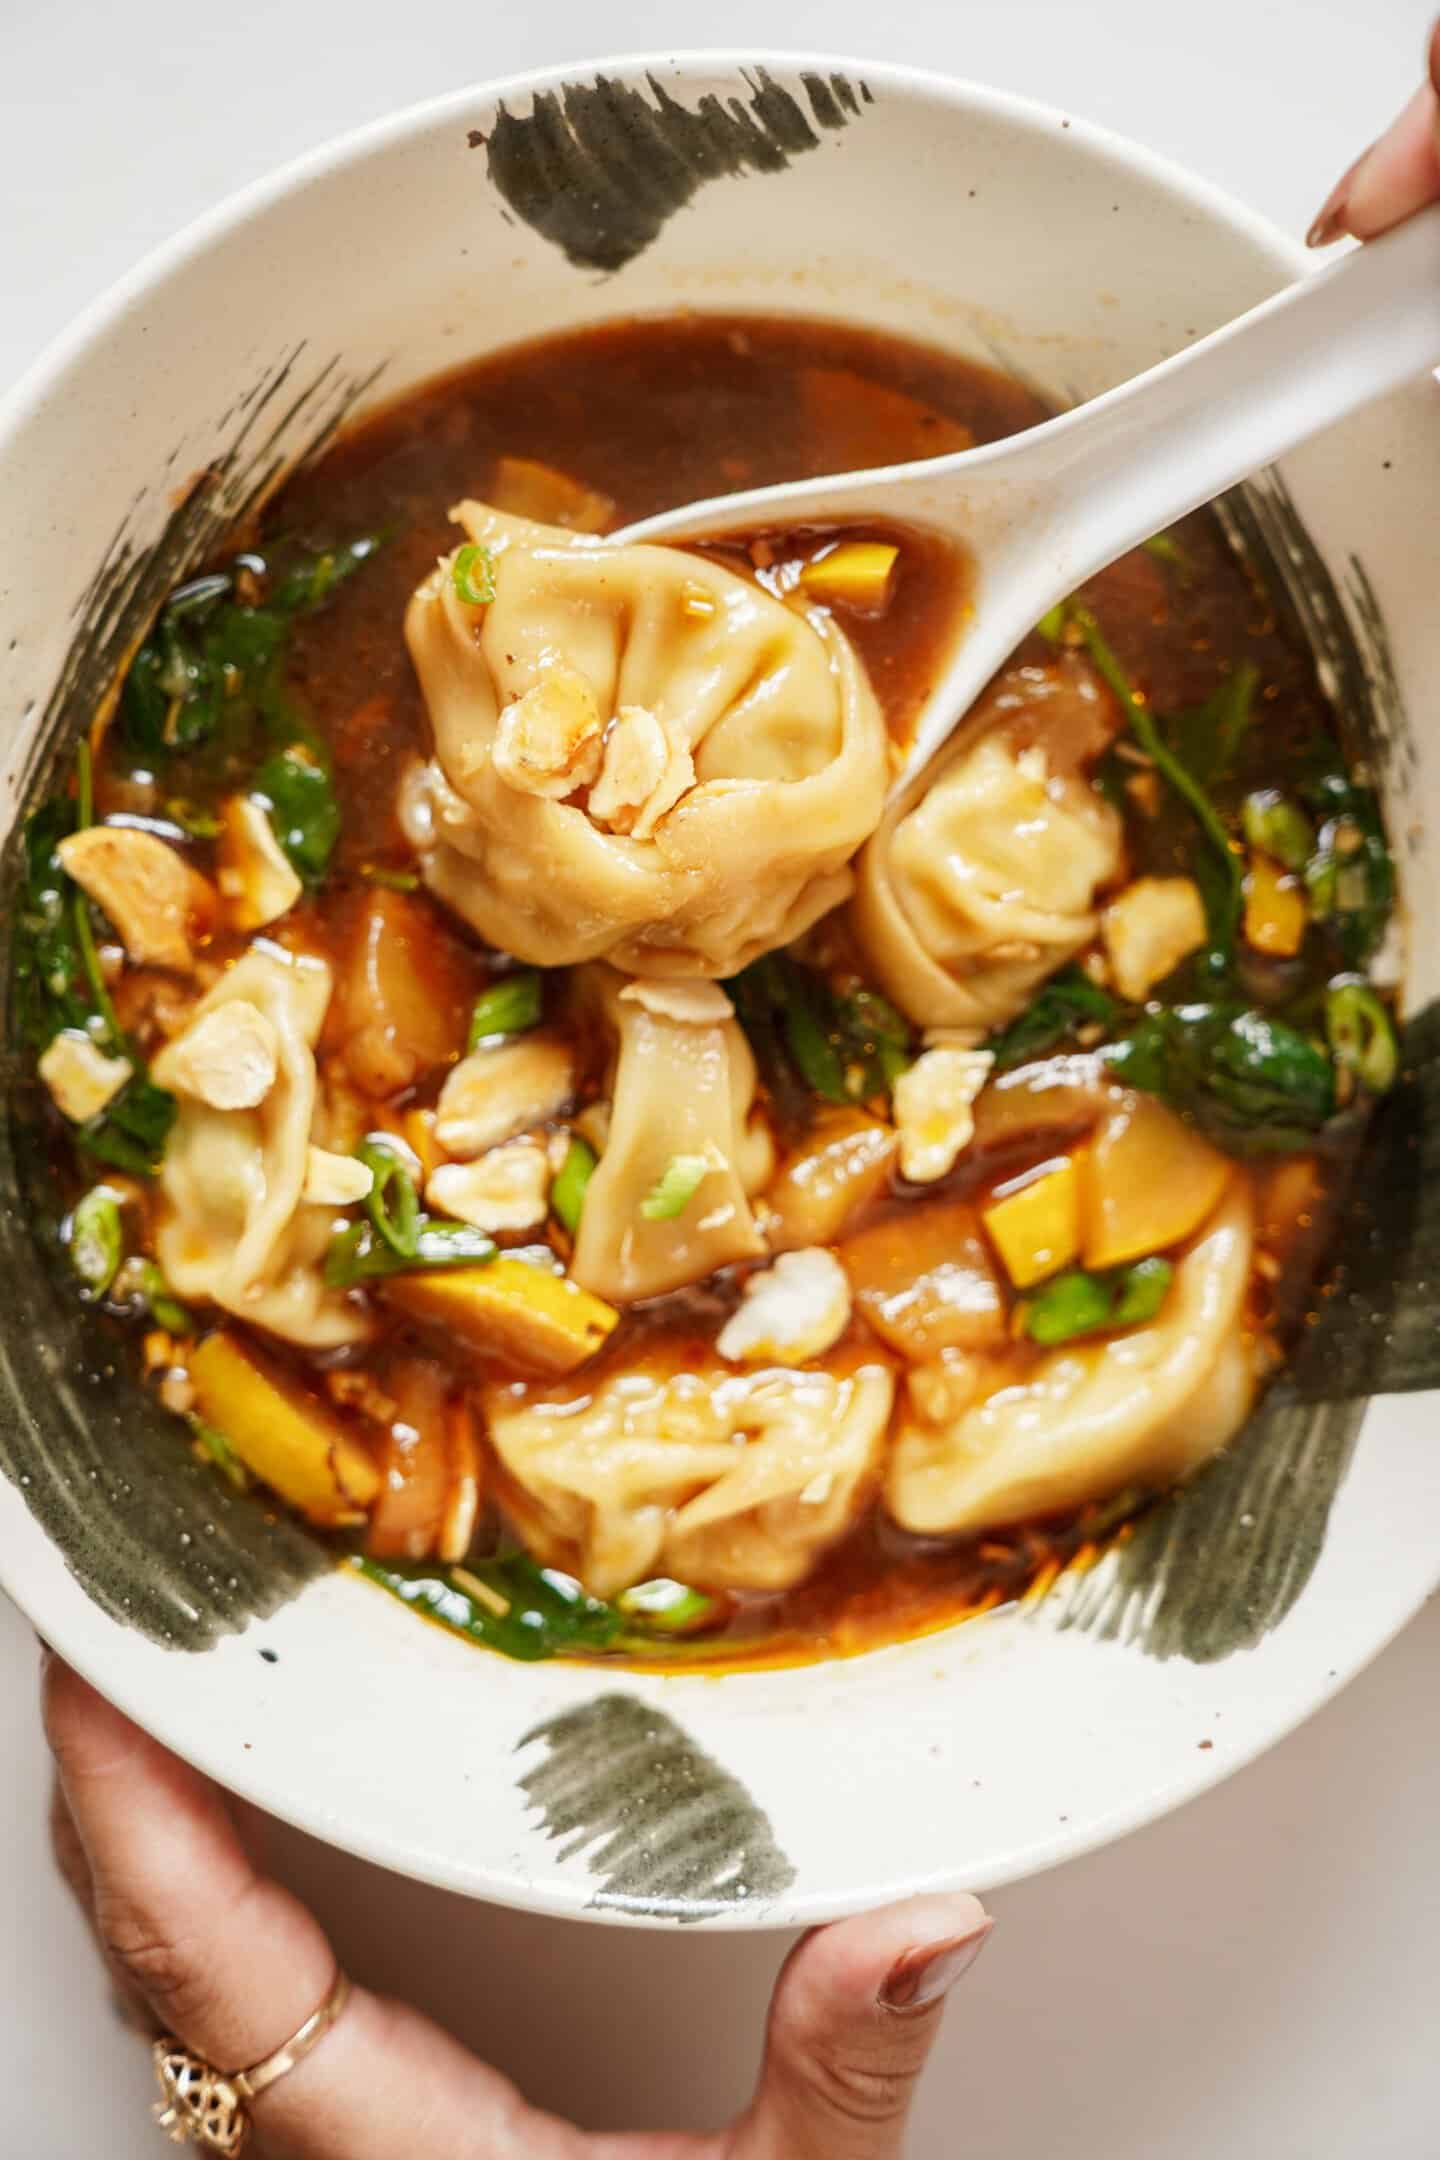 How to make Soup Dumpling〜小籠包〜 